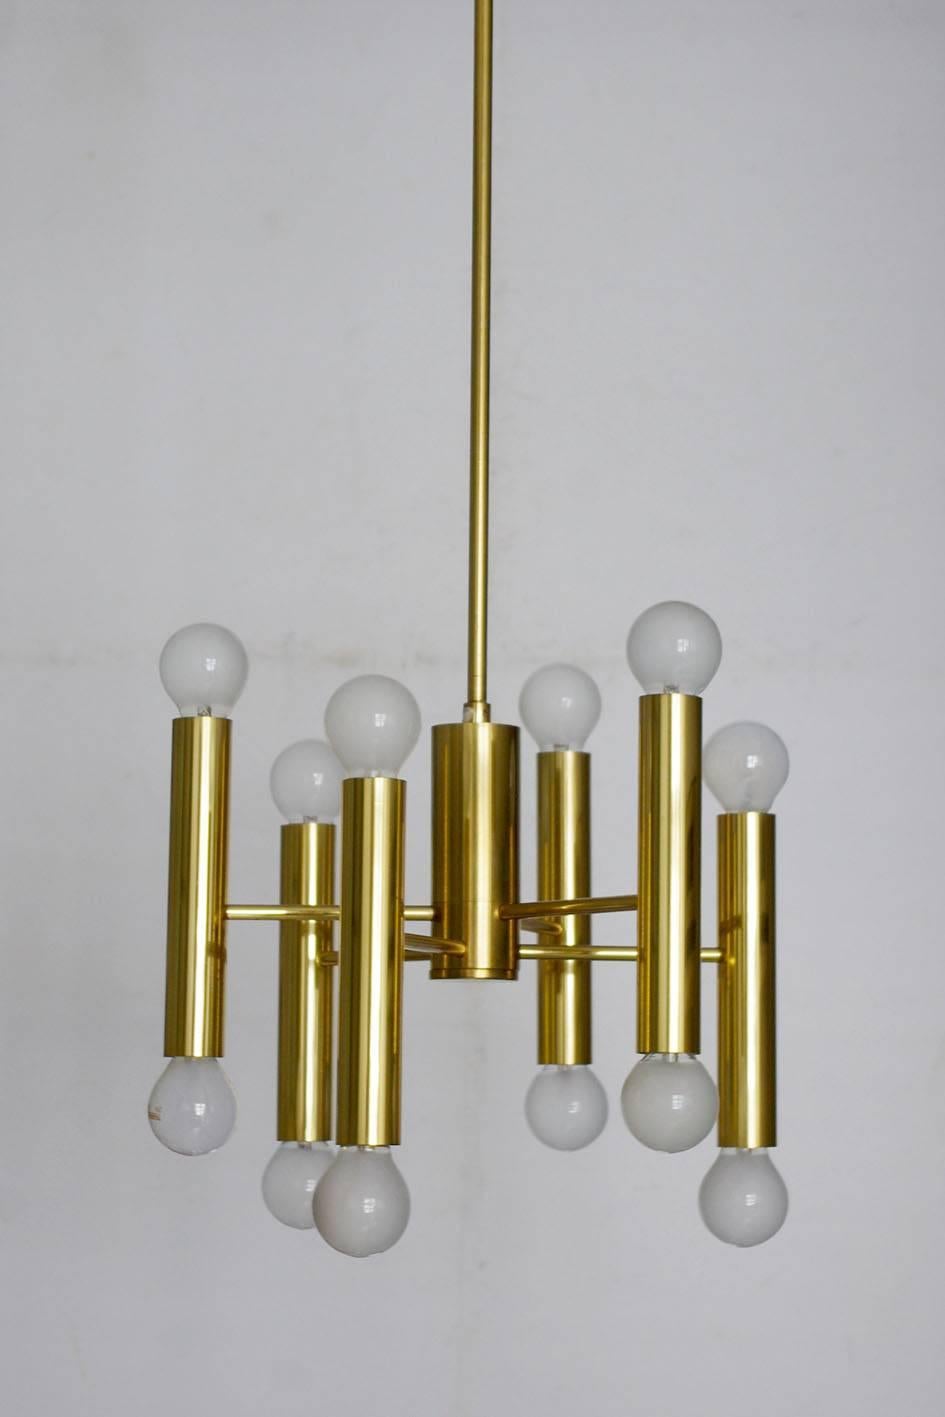 Brass Italian Vintage Modernist Sciolari Tube Chandeliers Ceiling Lights Pendants For Sale